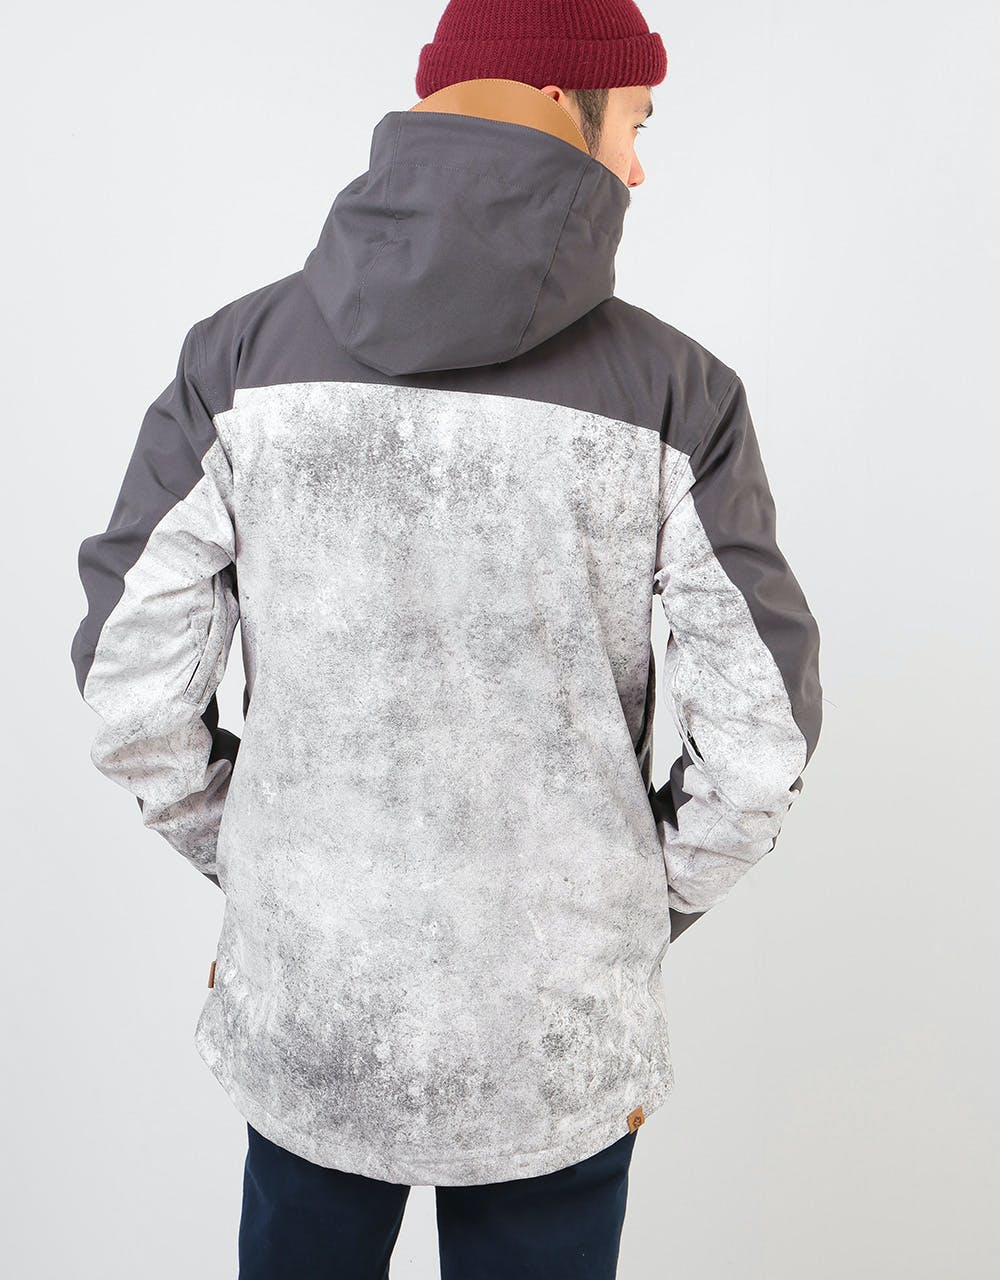 Sessions Ransack Insulated Snowboard Jacket - Dark Grey/Concrete